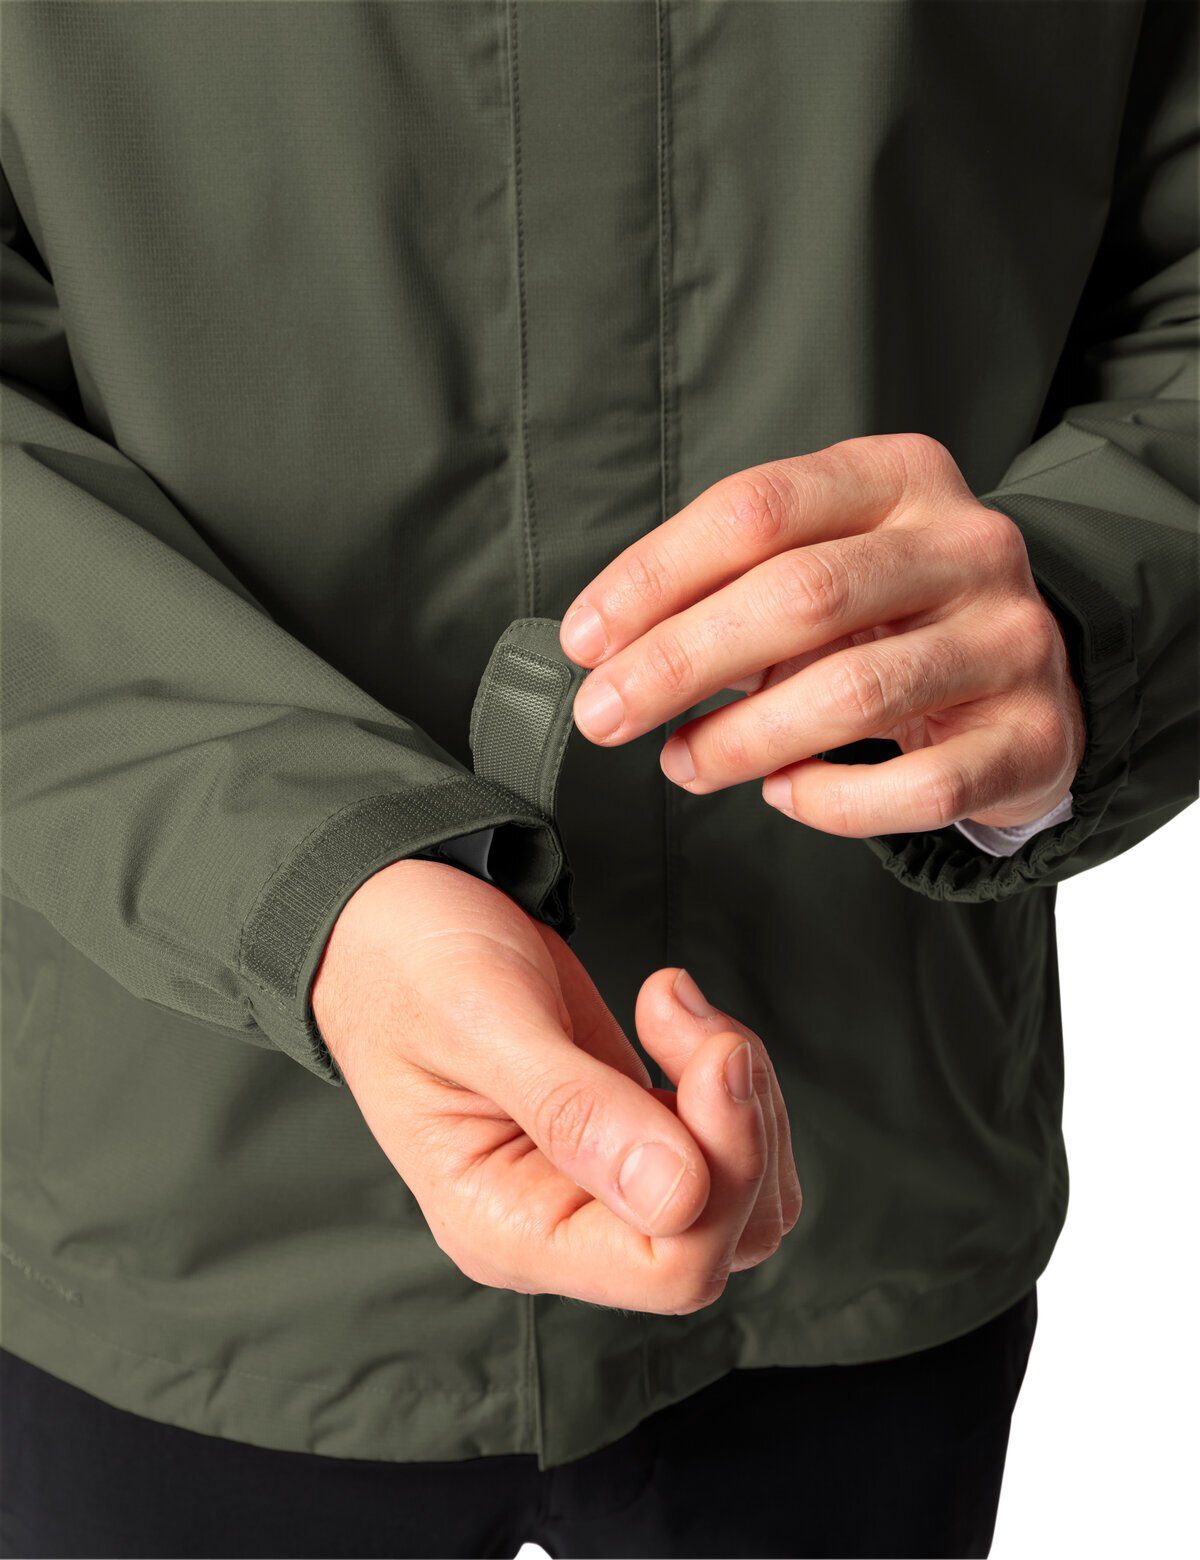 (1-St) uni VAUDE Klimaneutral Outdoorjacke Men's Light Jacket Escape khaki kompensiert